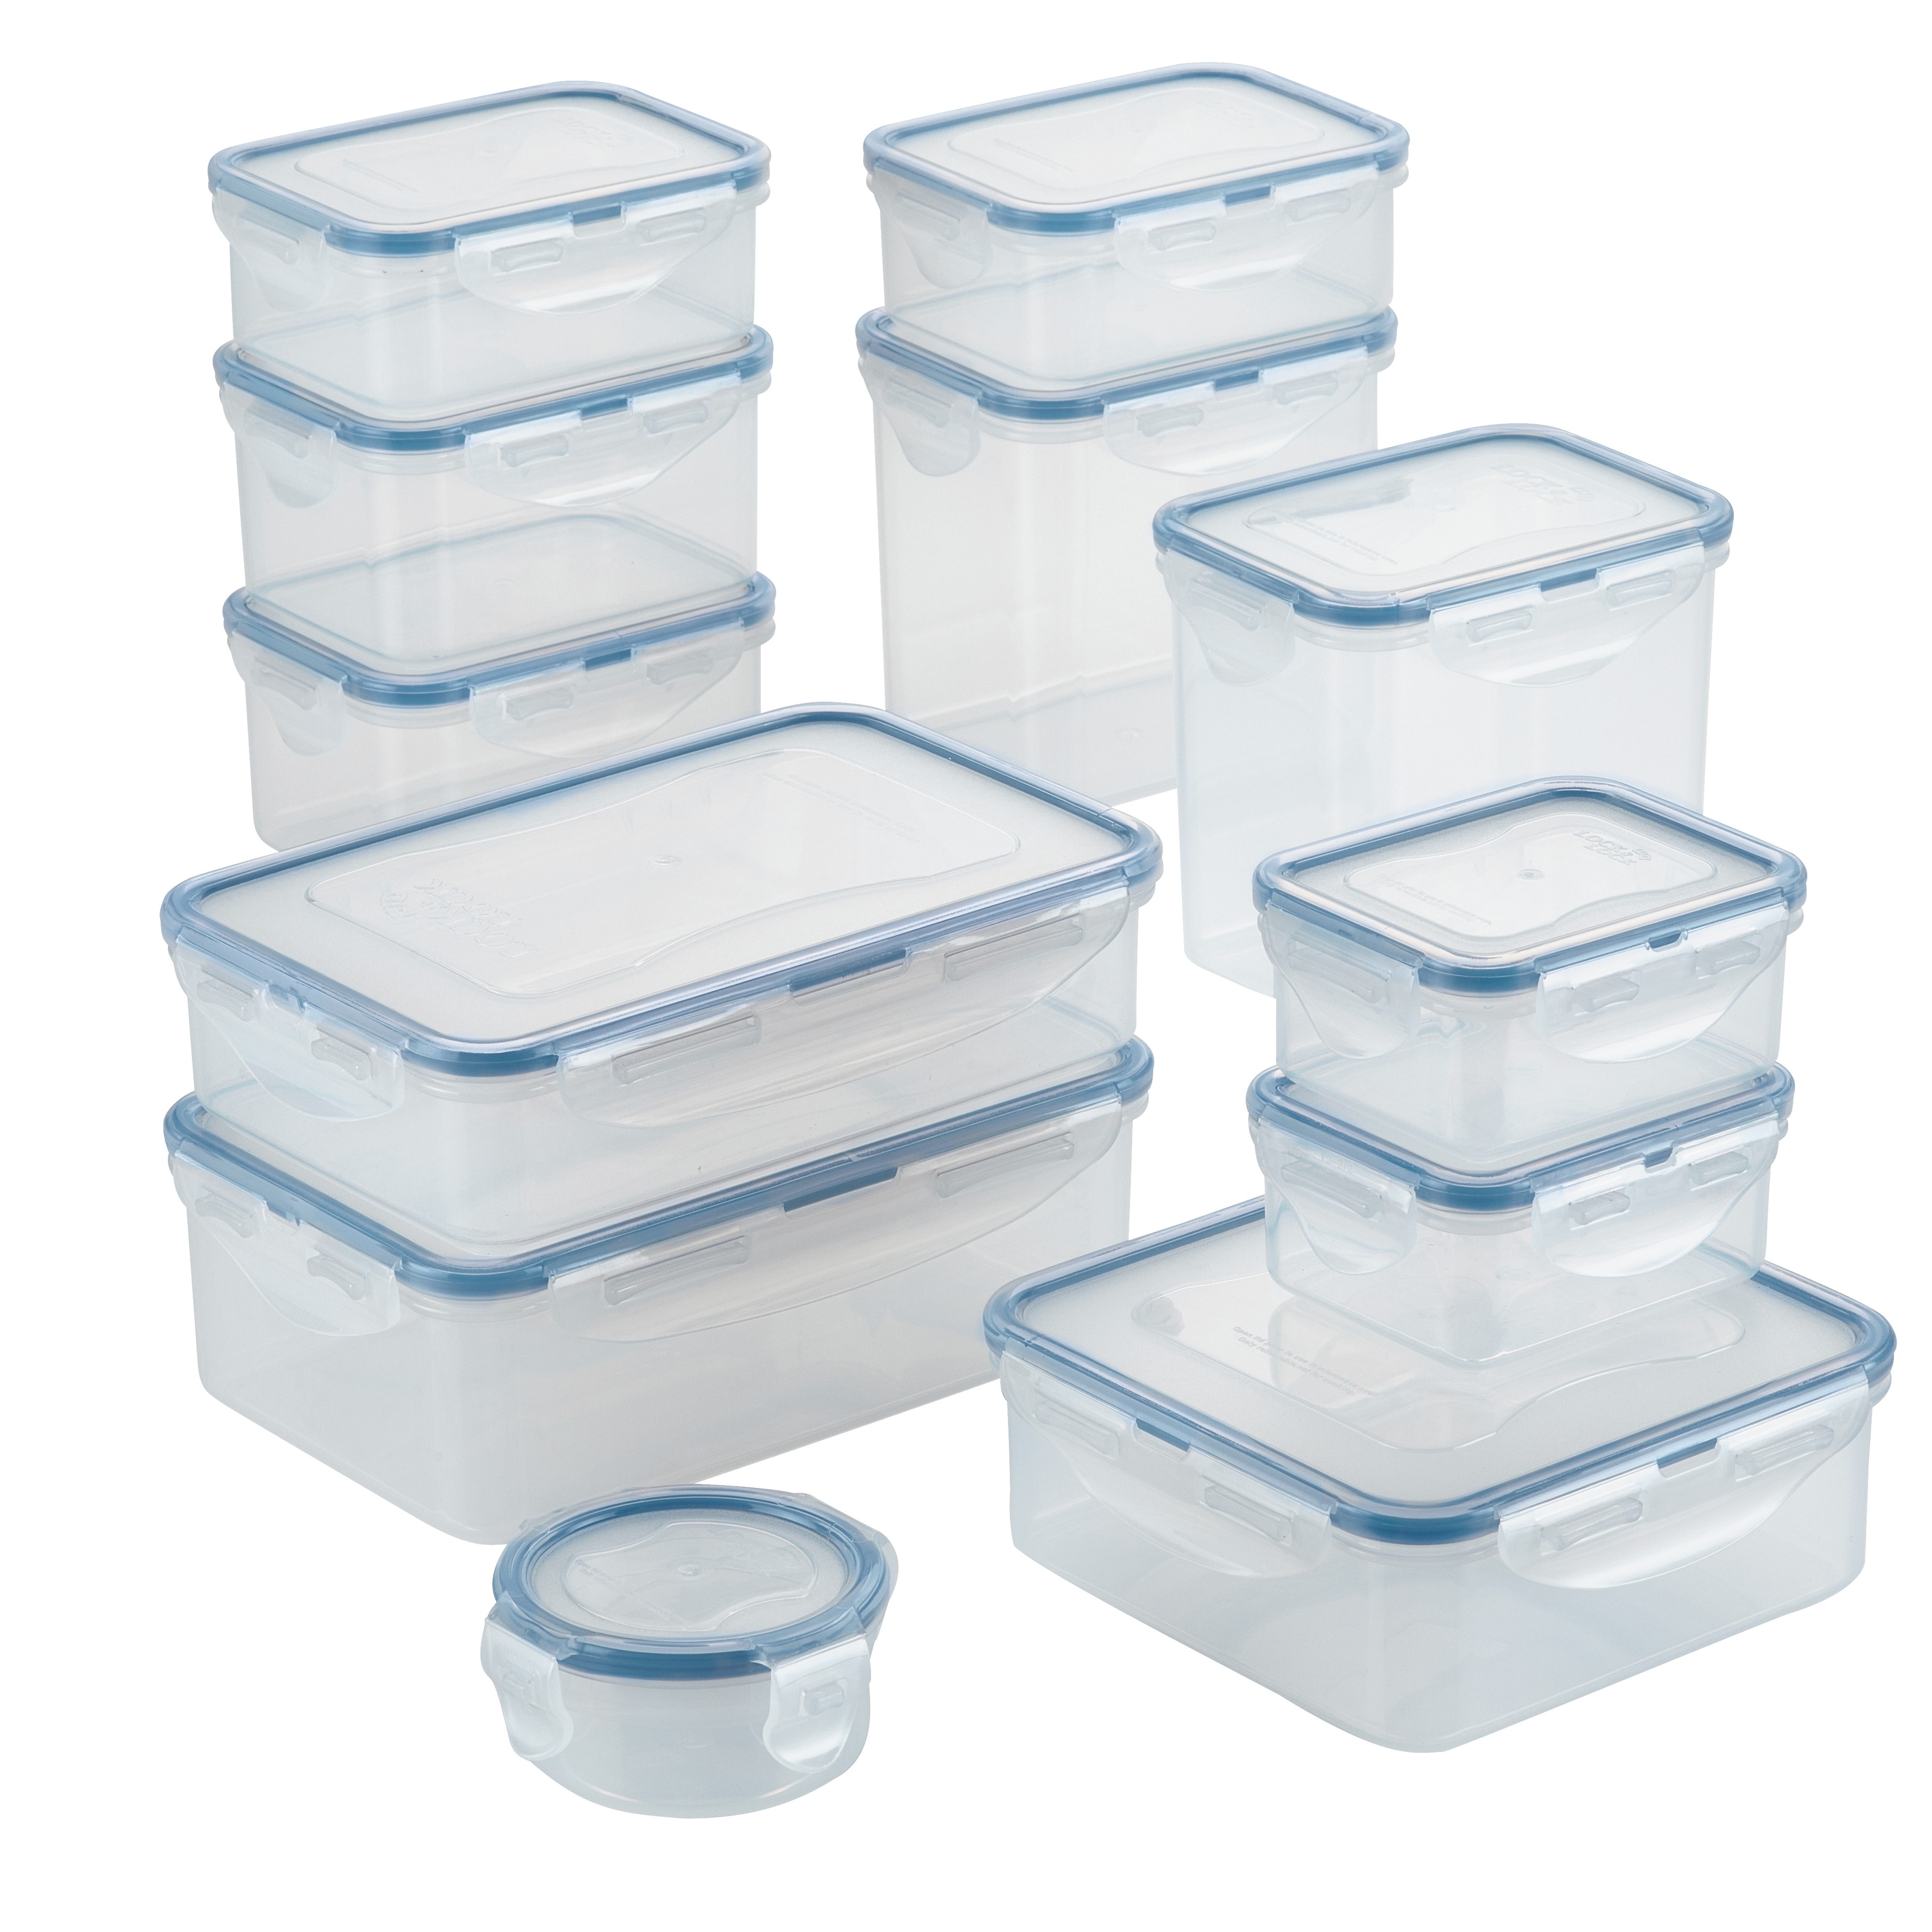 https://ak1.ostkcdn.com/images/products/is/images/direct/c3c52c1307dc479d52e98a5162f4740e276964e5/LocknLock-Storage-Food-Storage-Container-Set%2C-24-Piece%2C-Clear.jpg